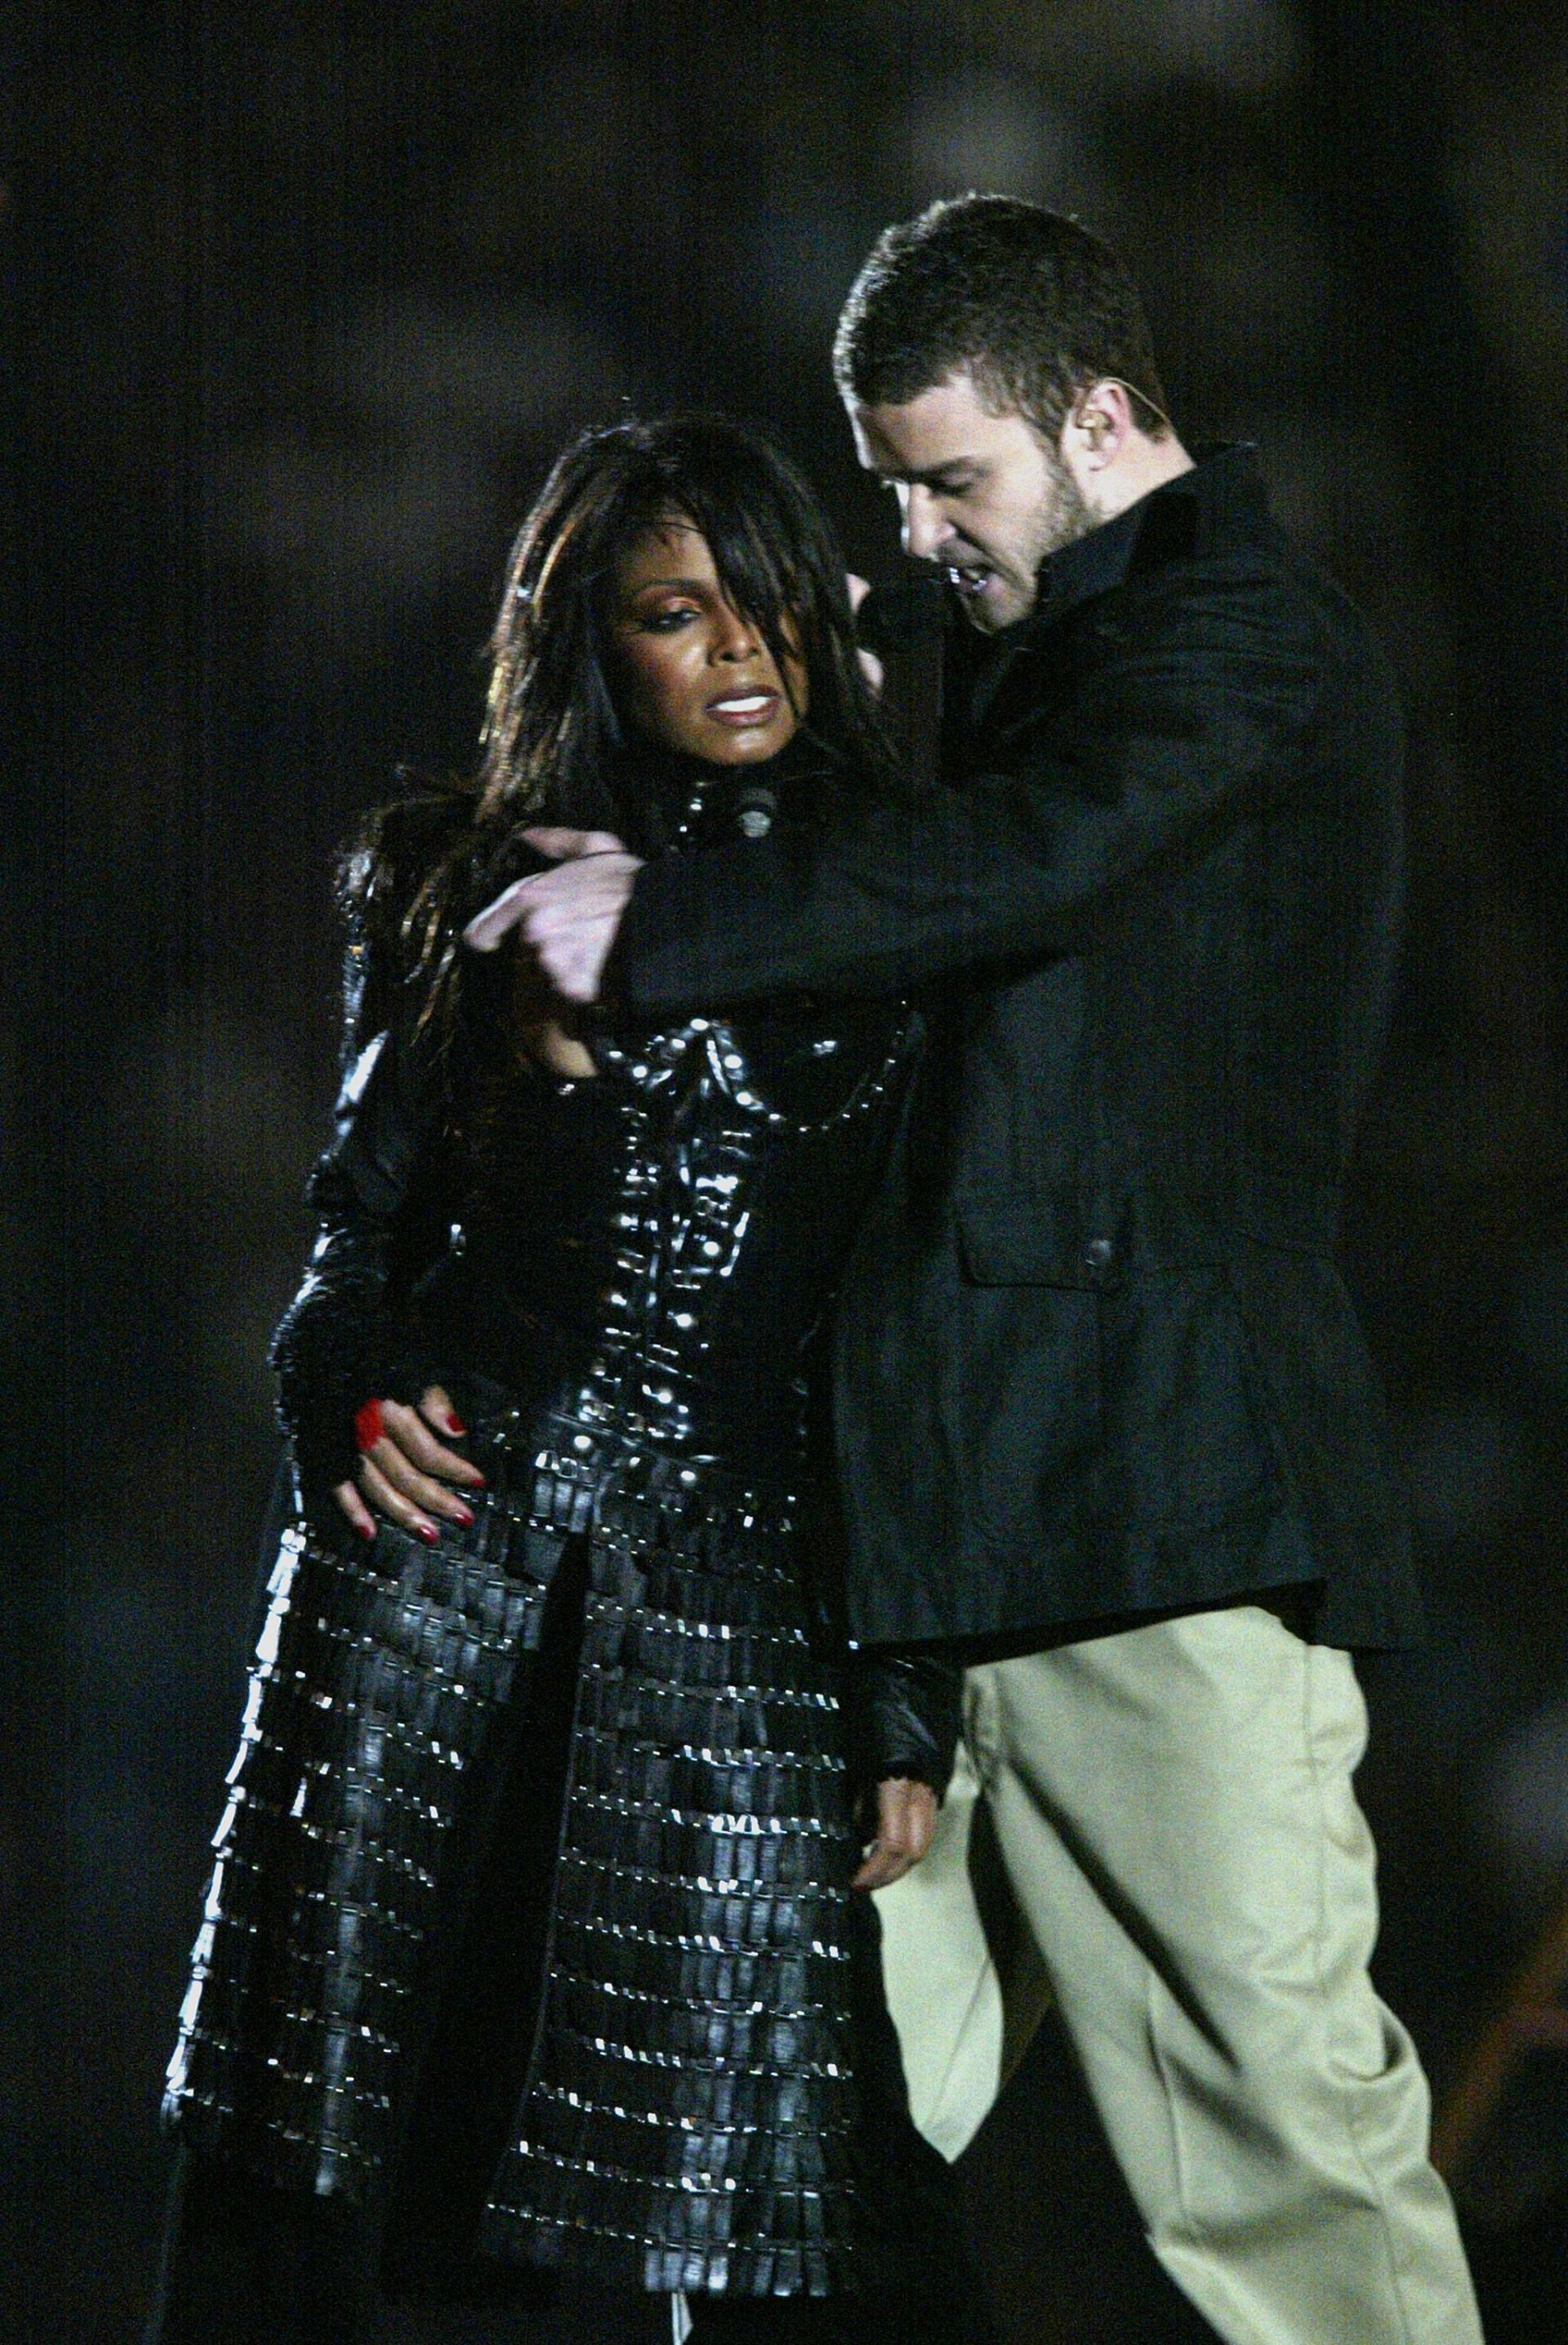 Timberlake and Jackson at the half-time show